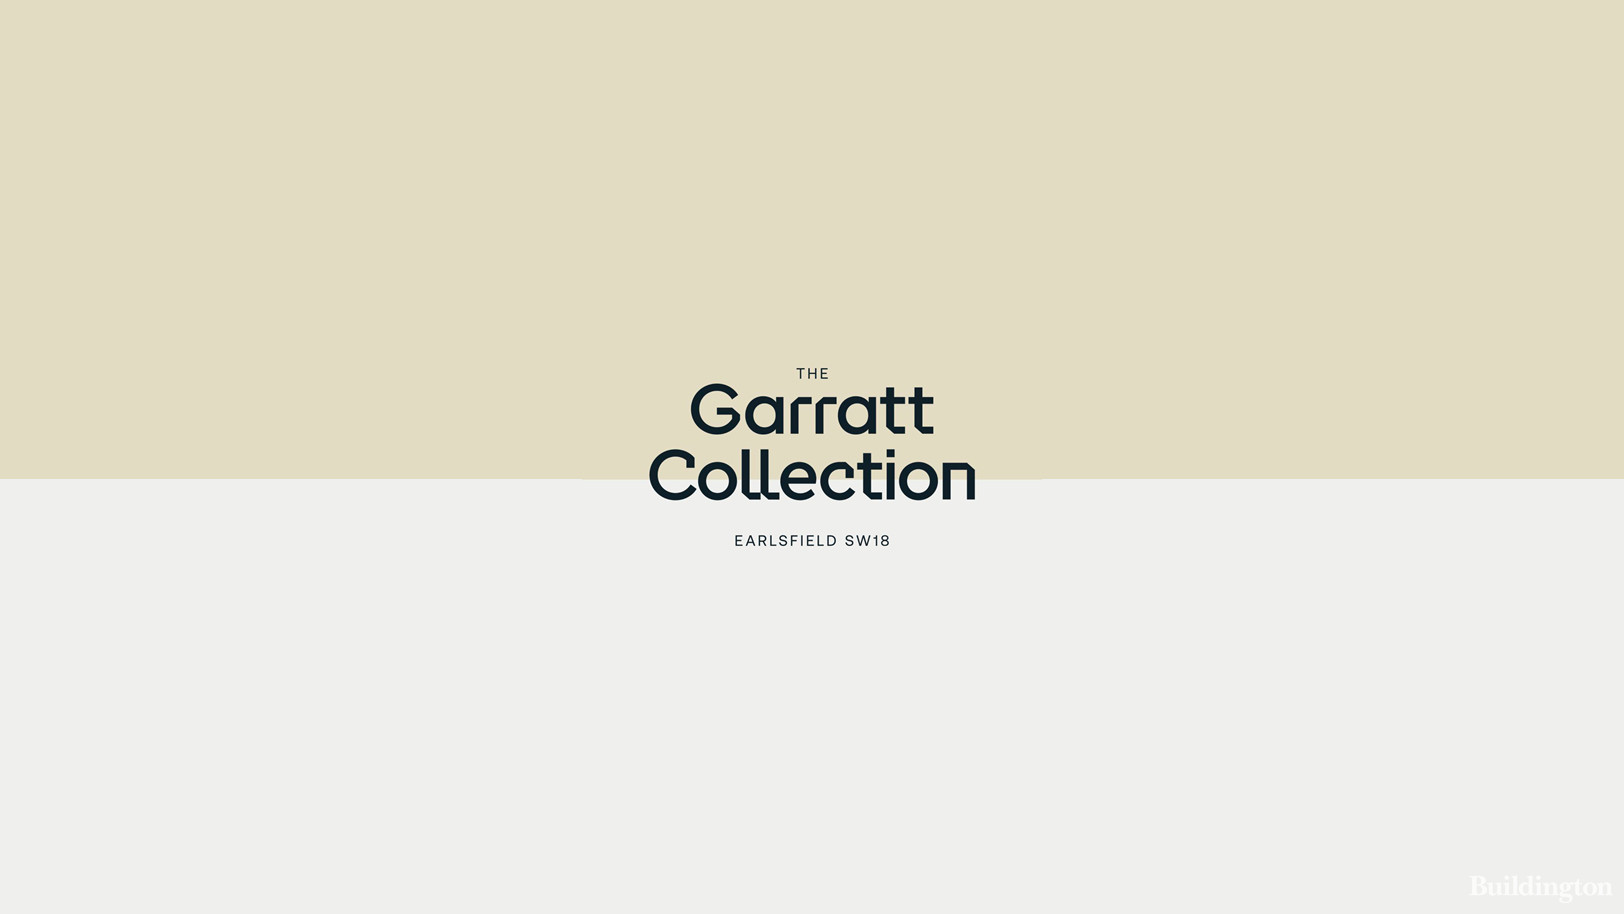 The Garratt Collection development logo cover